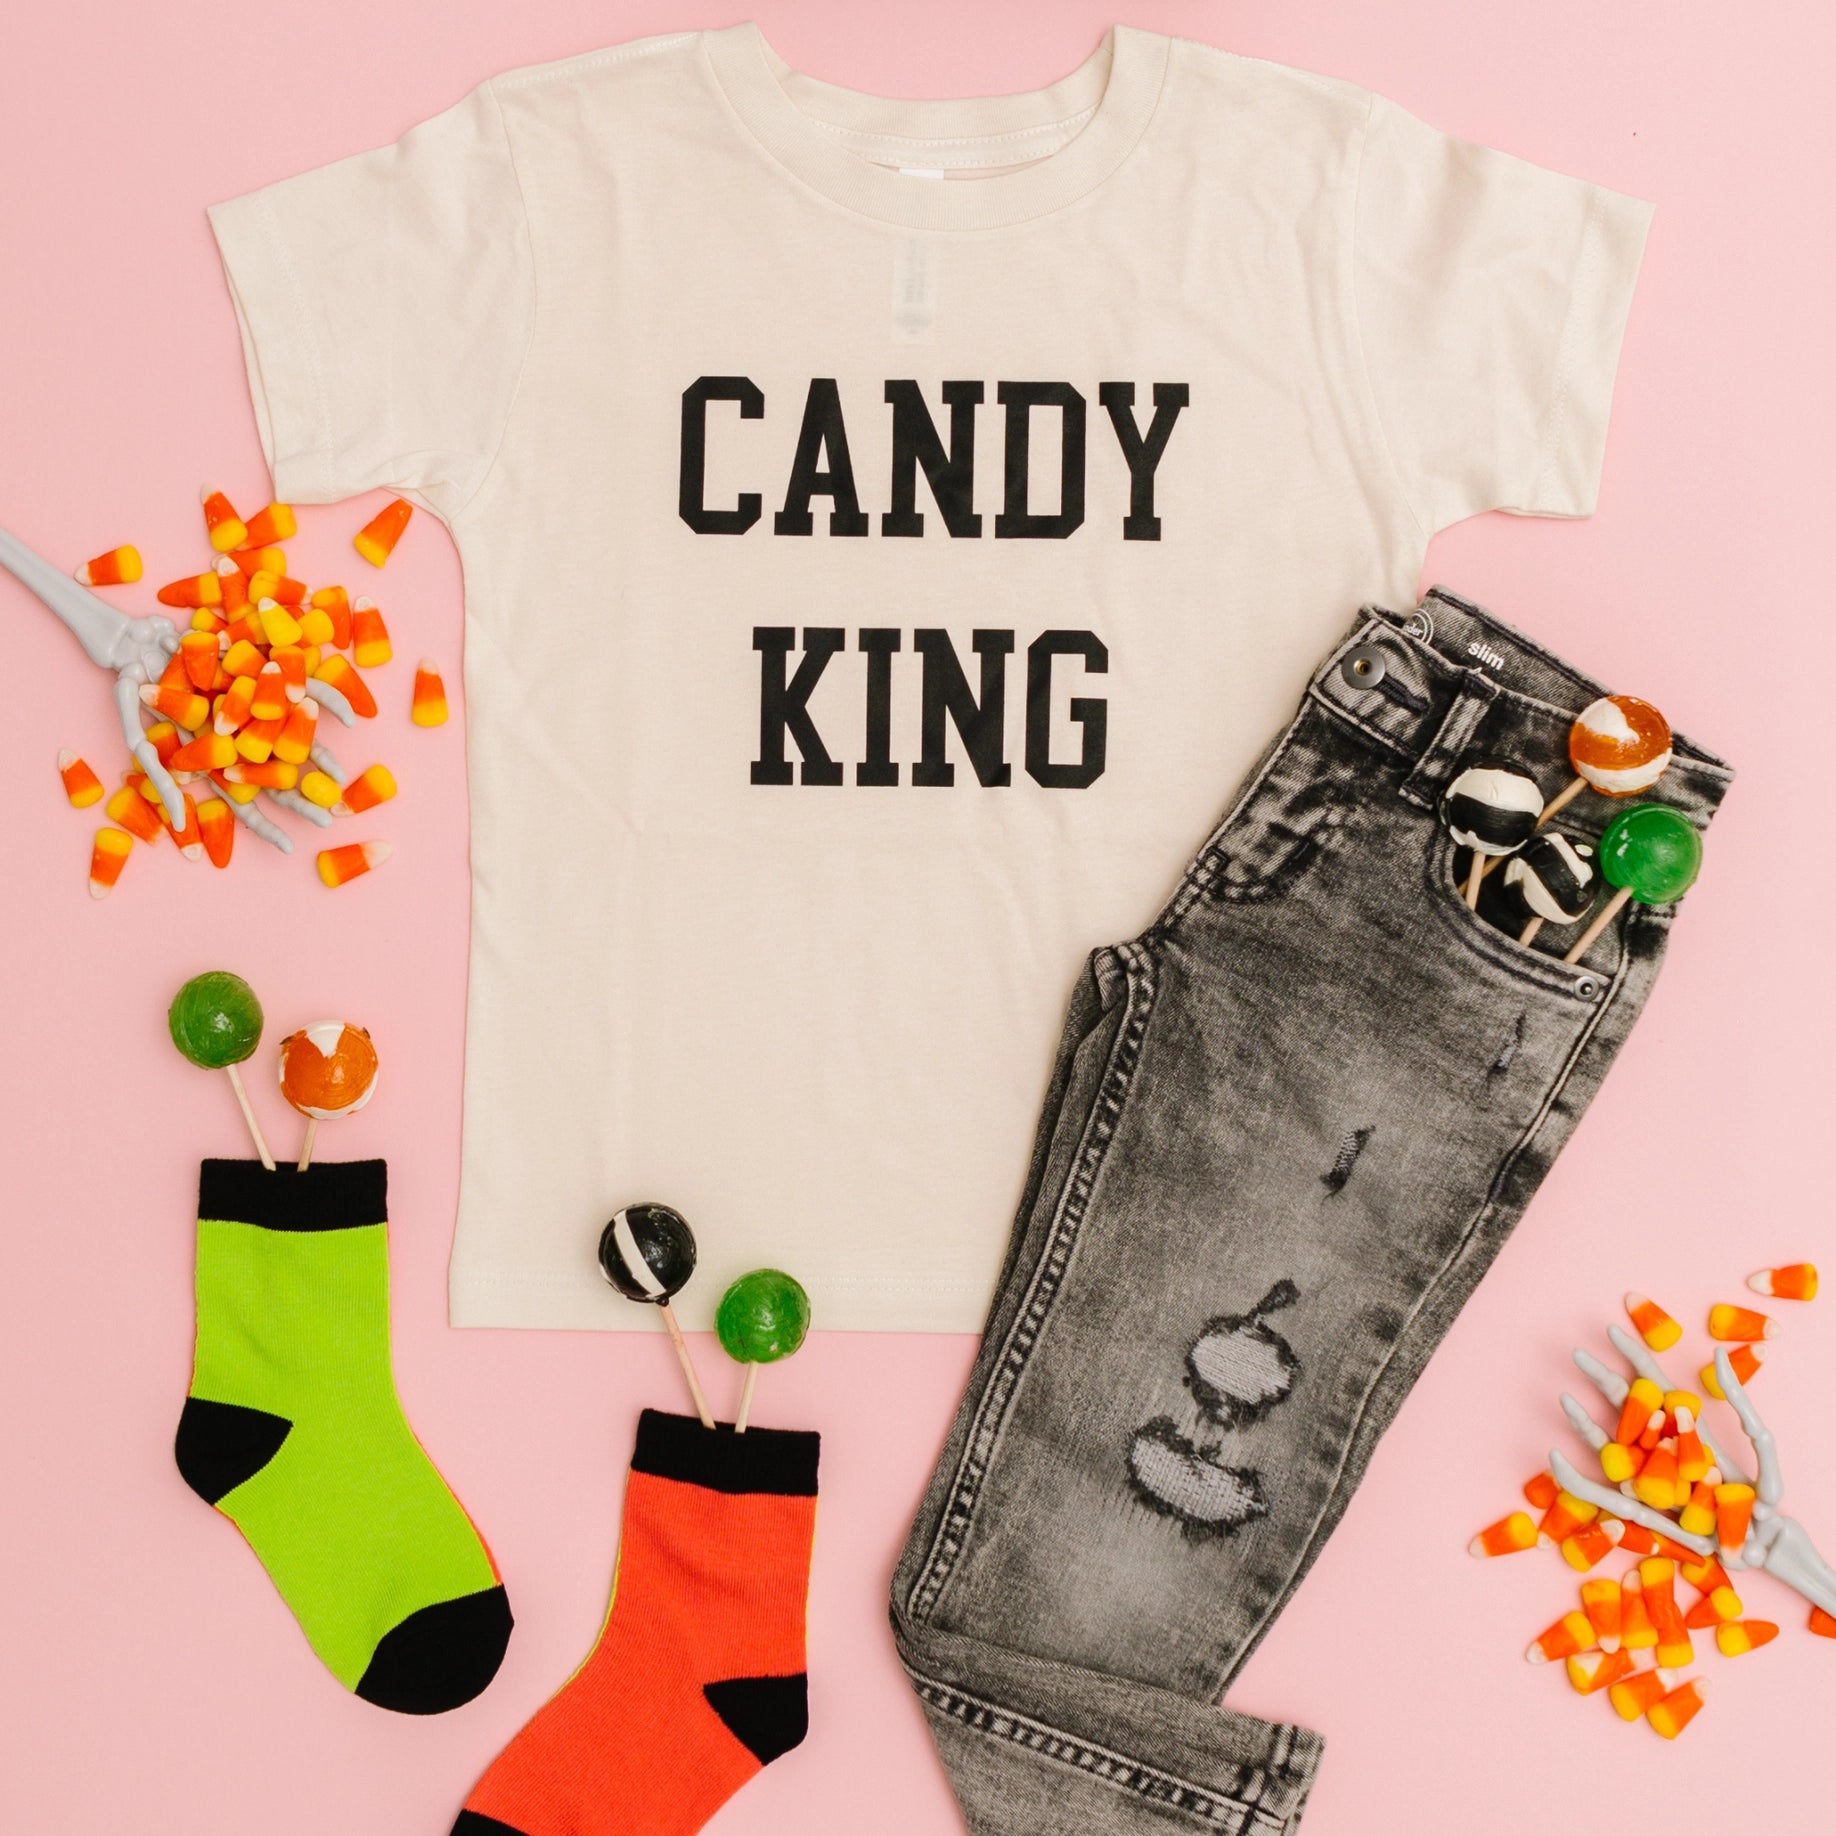 Candy King Tee